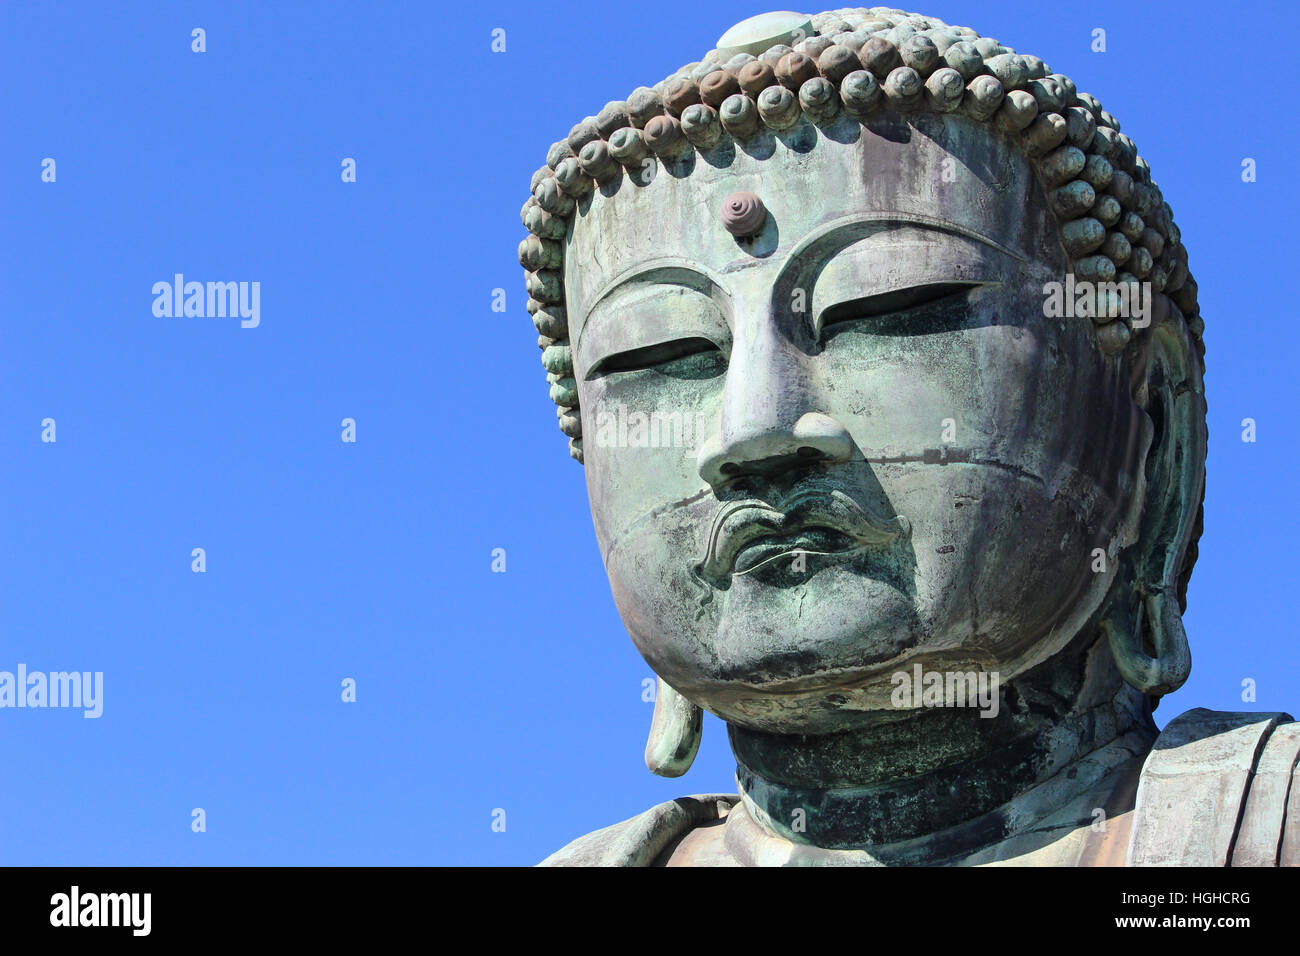 Closeup of the Great Buddha of Kamakura, Japan Stock Photo